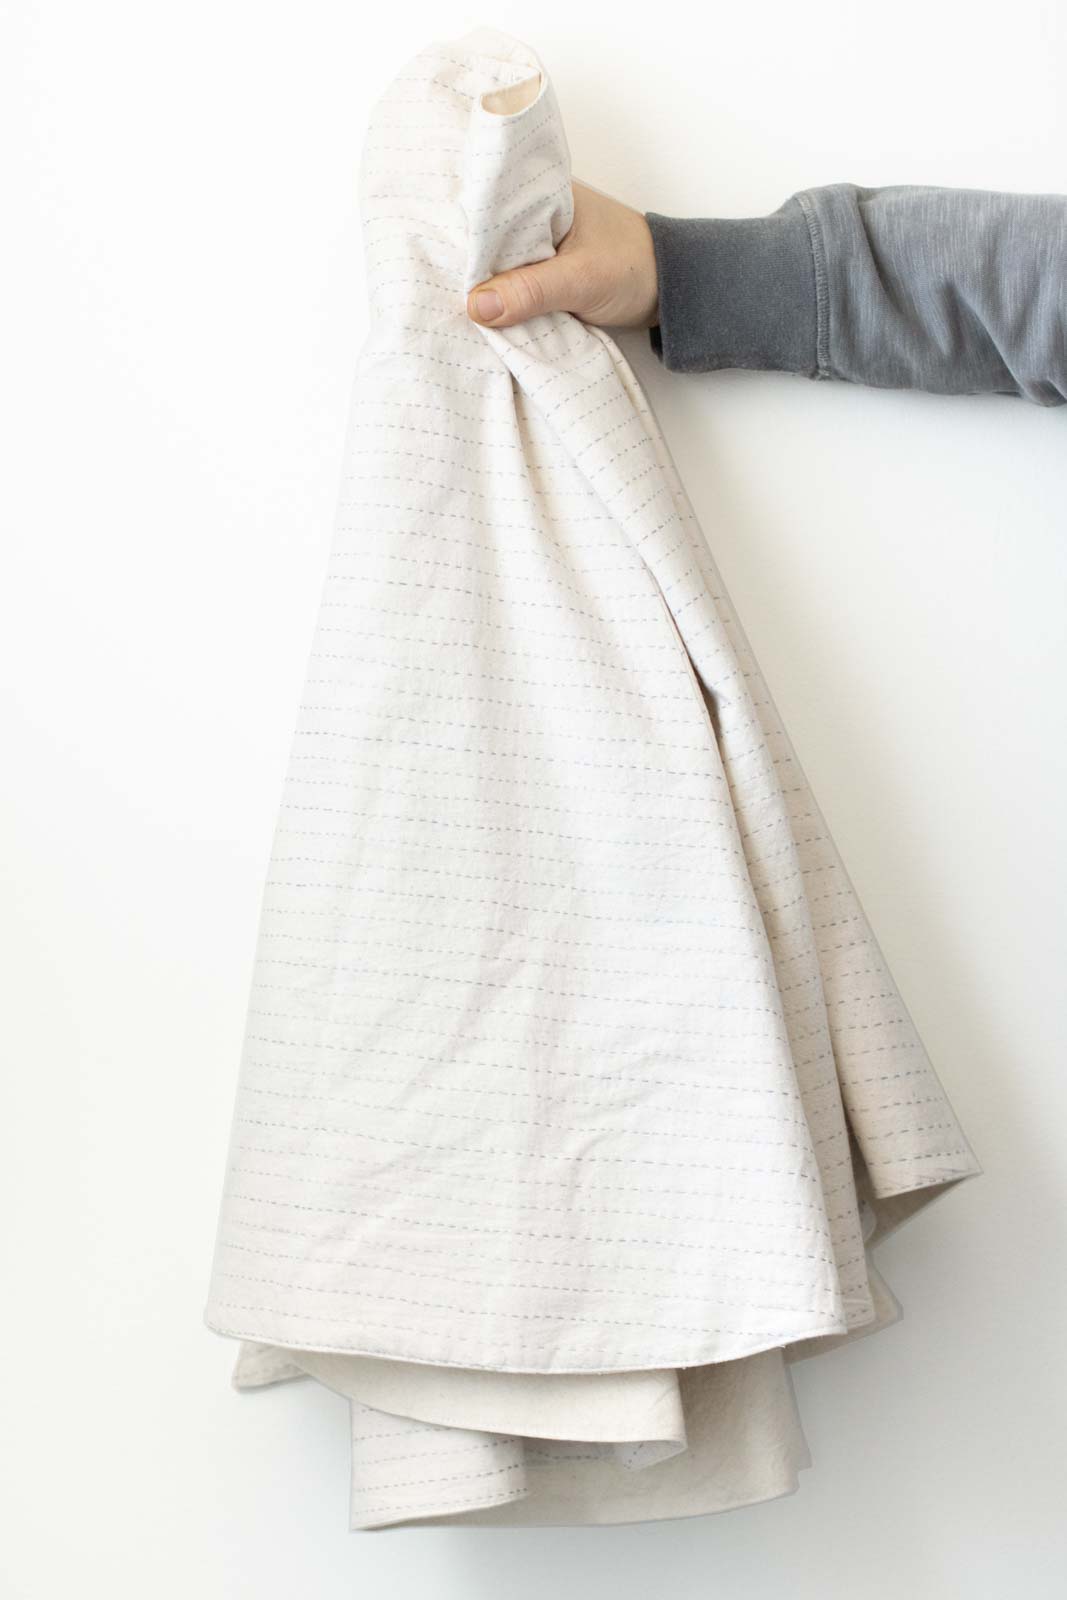 Kantha Christmas Tree Skirt - Simplicity (Grey)